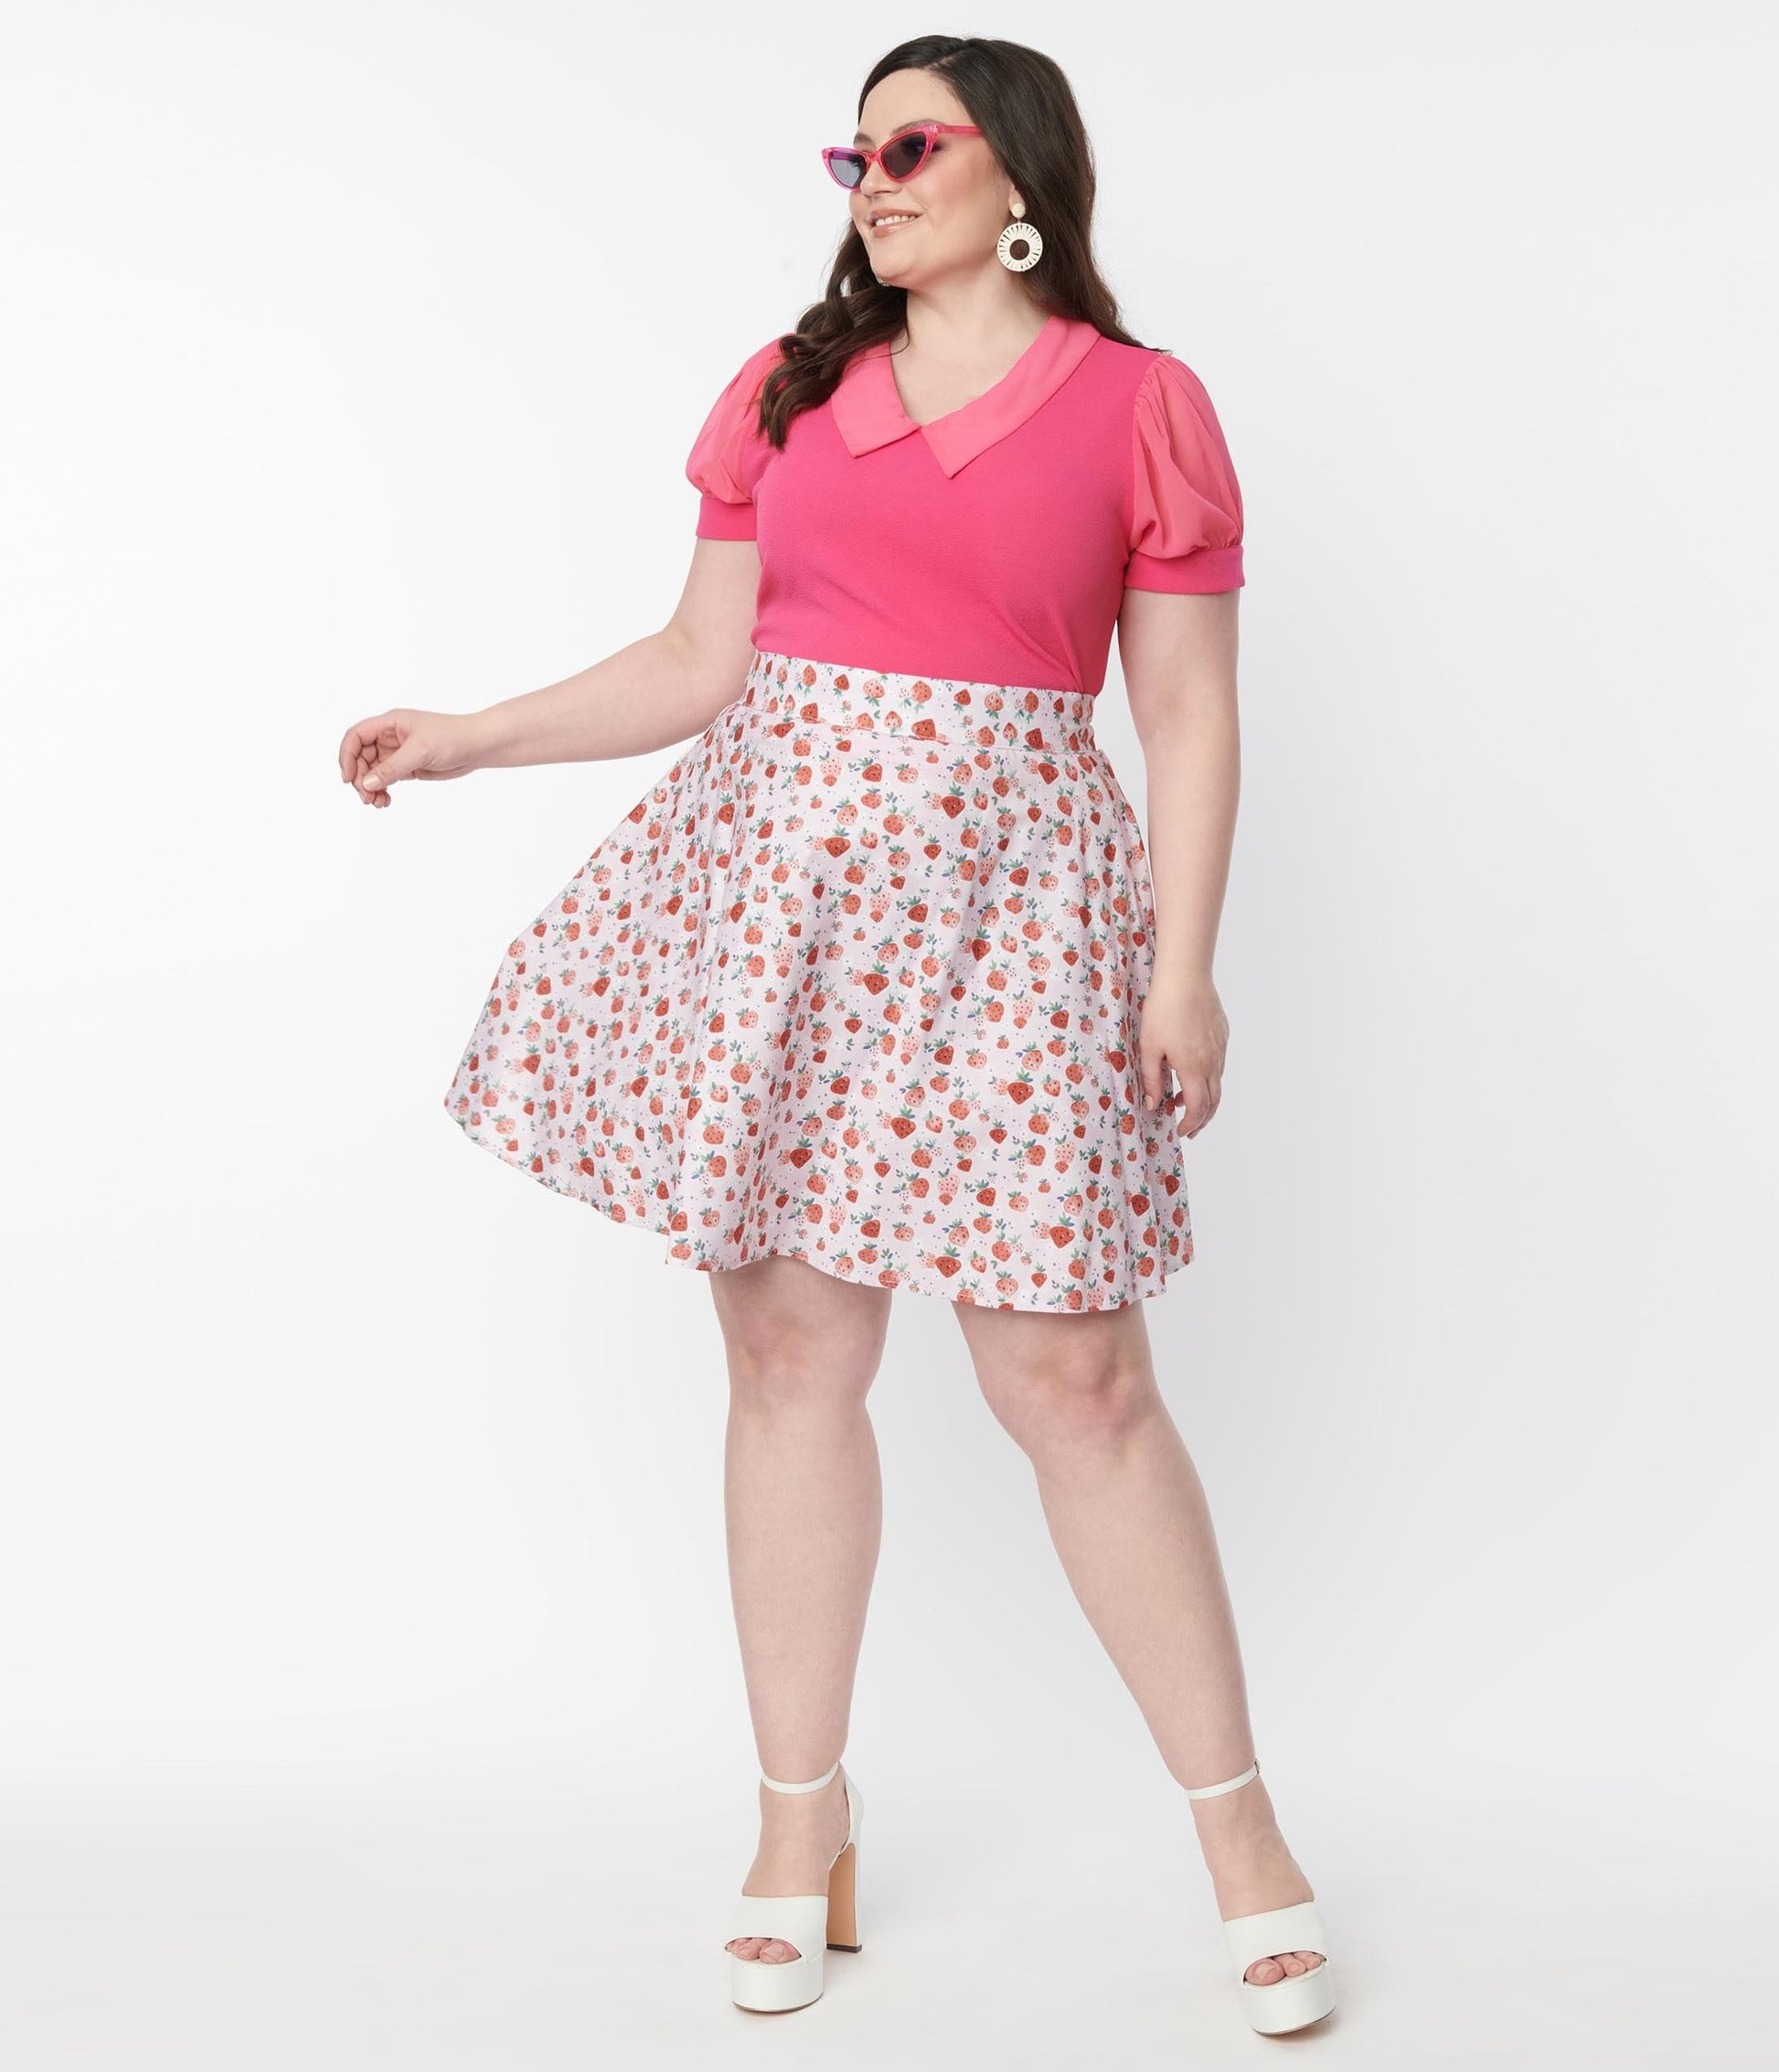 Retrolicious Plus Size Pink Strawberry Print Skater Skirt